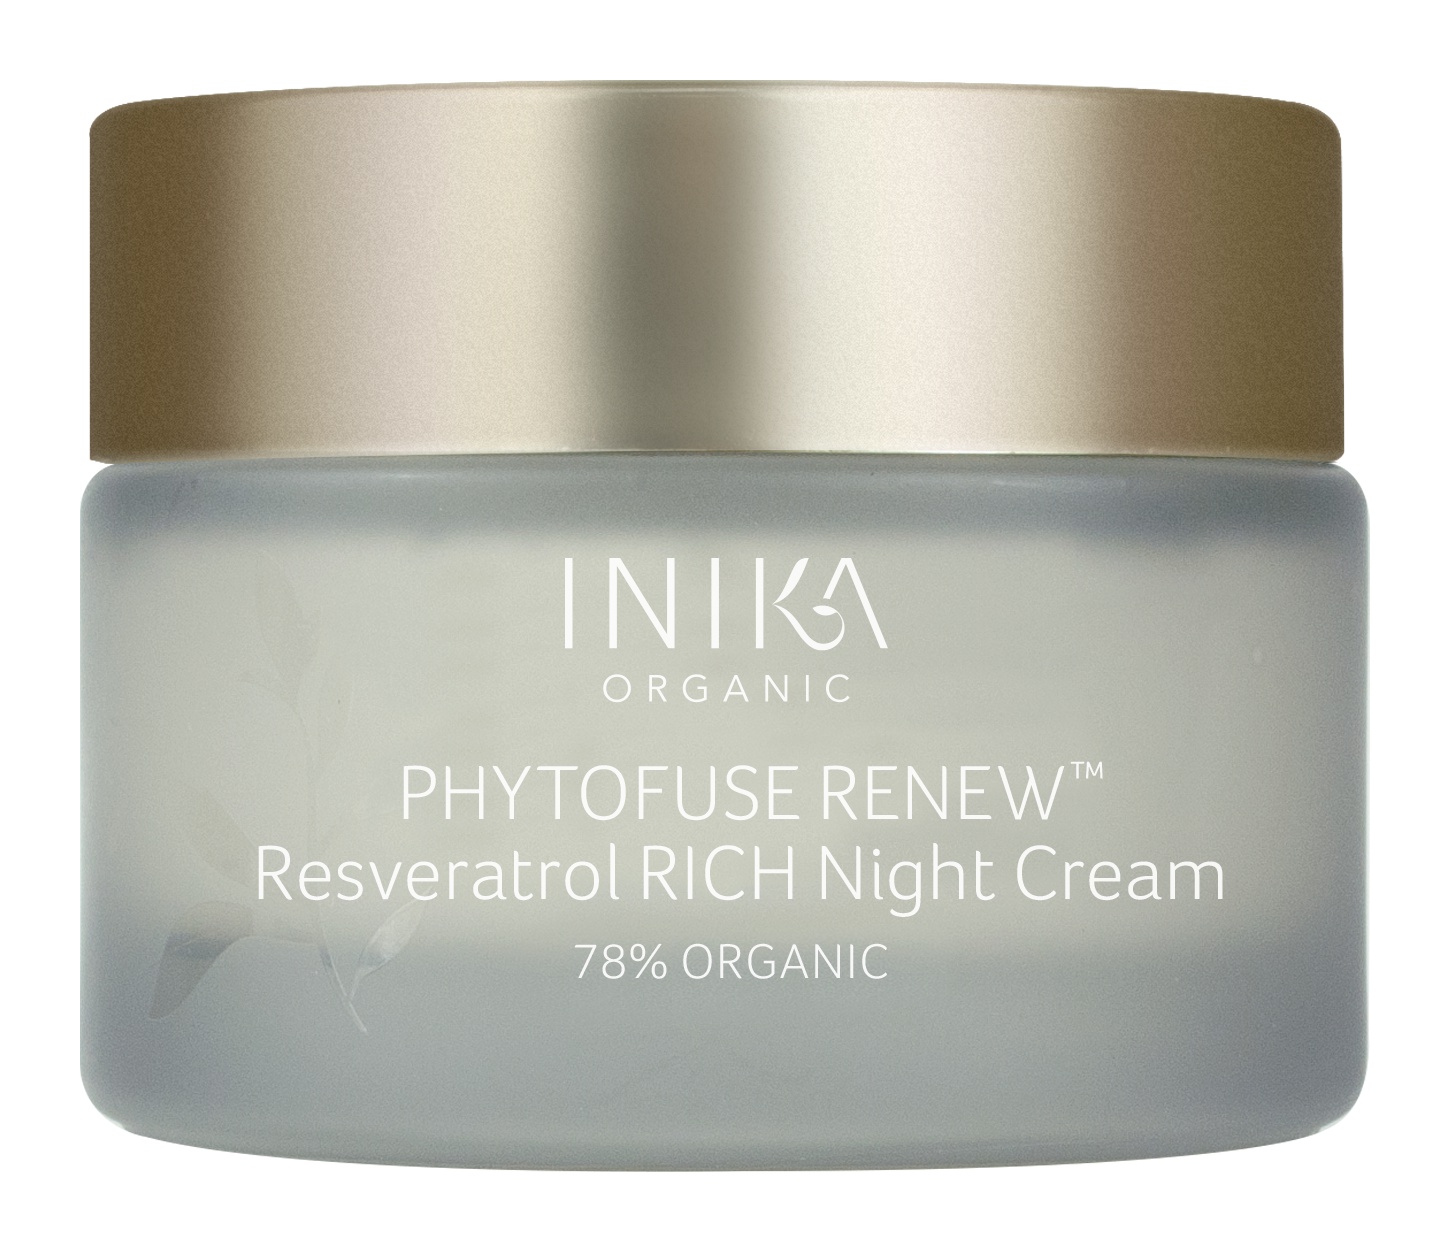 Inika Organic Phytofuse Renew Reservatrol Rich Night Cream